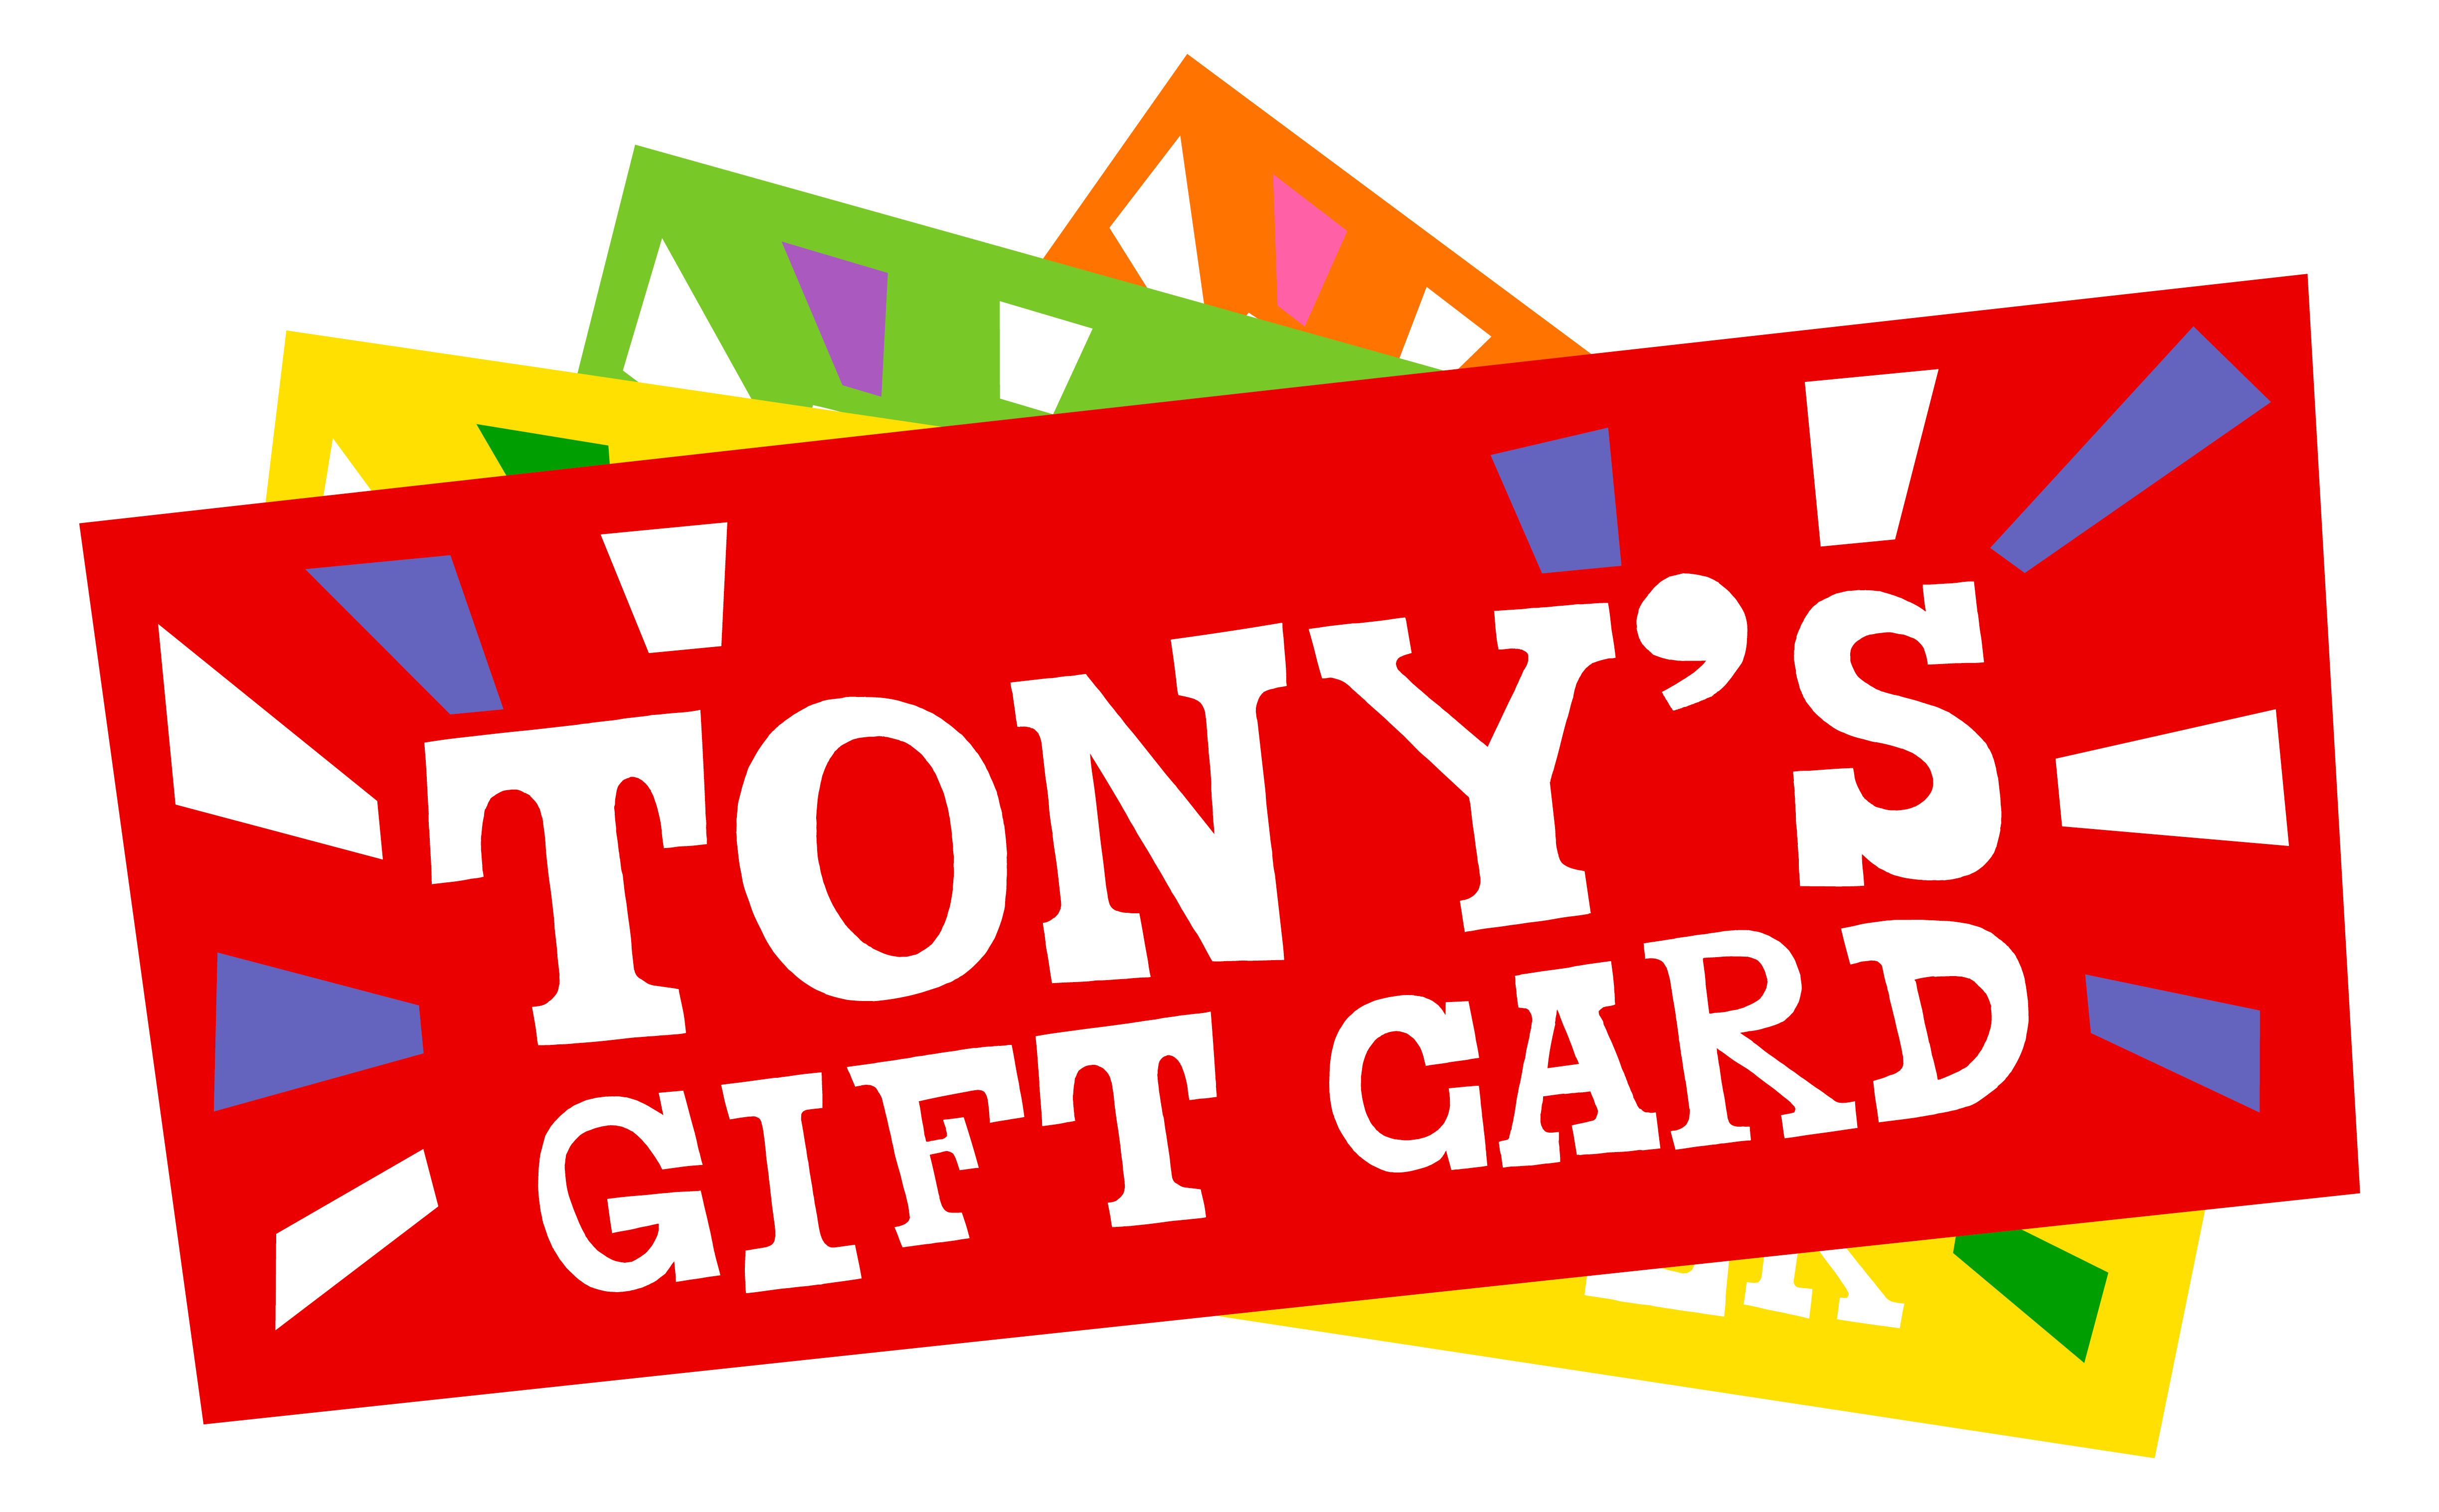 Tony's Digital Giftcard